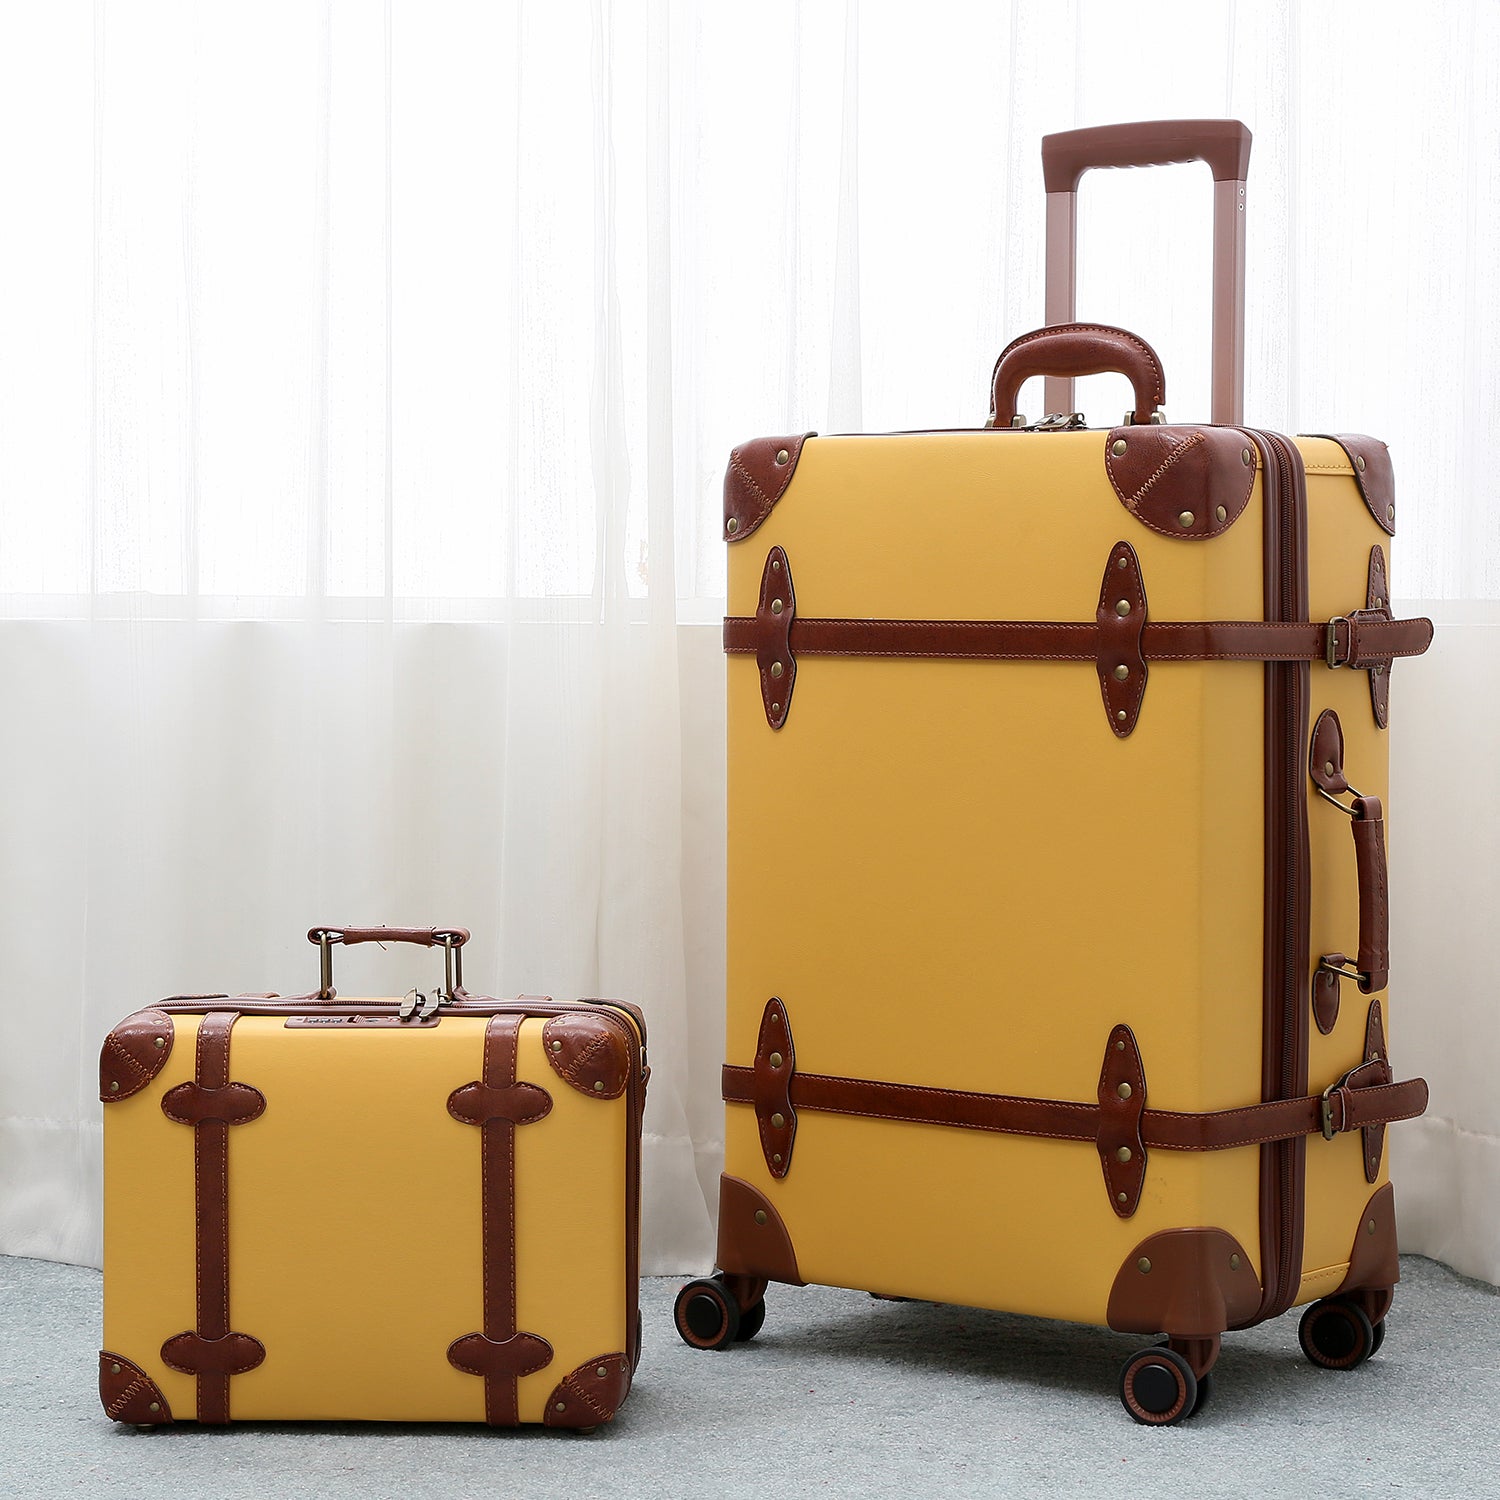 urecity Luggage Set on Wheels Vintage Cute Travel Retro Carry Ons